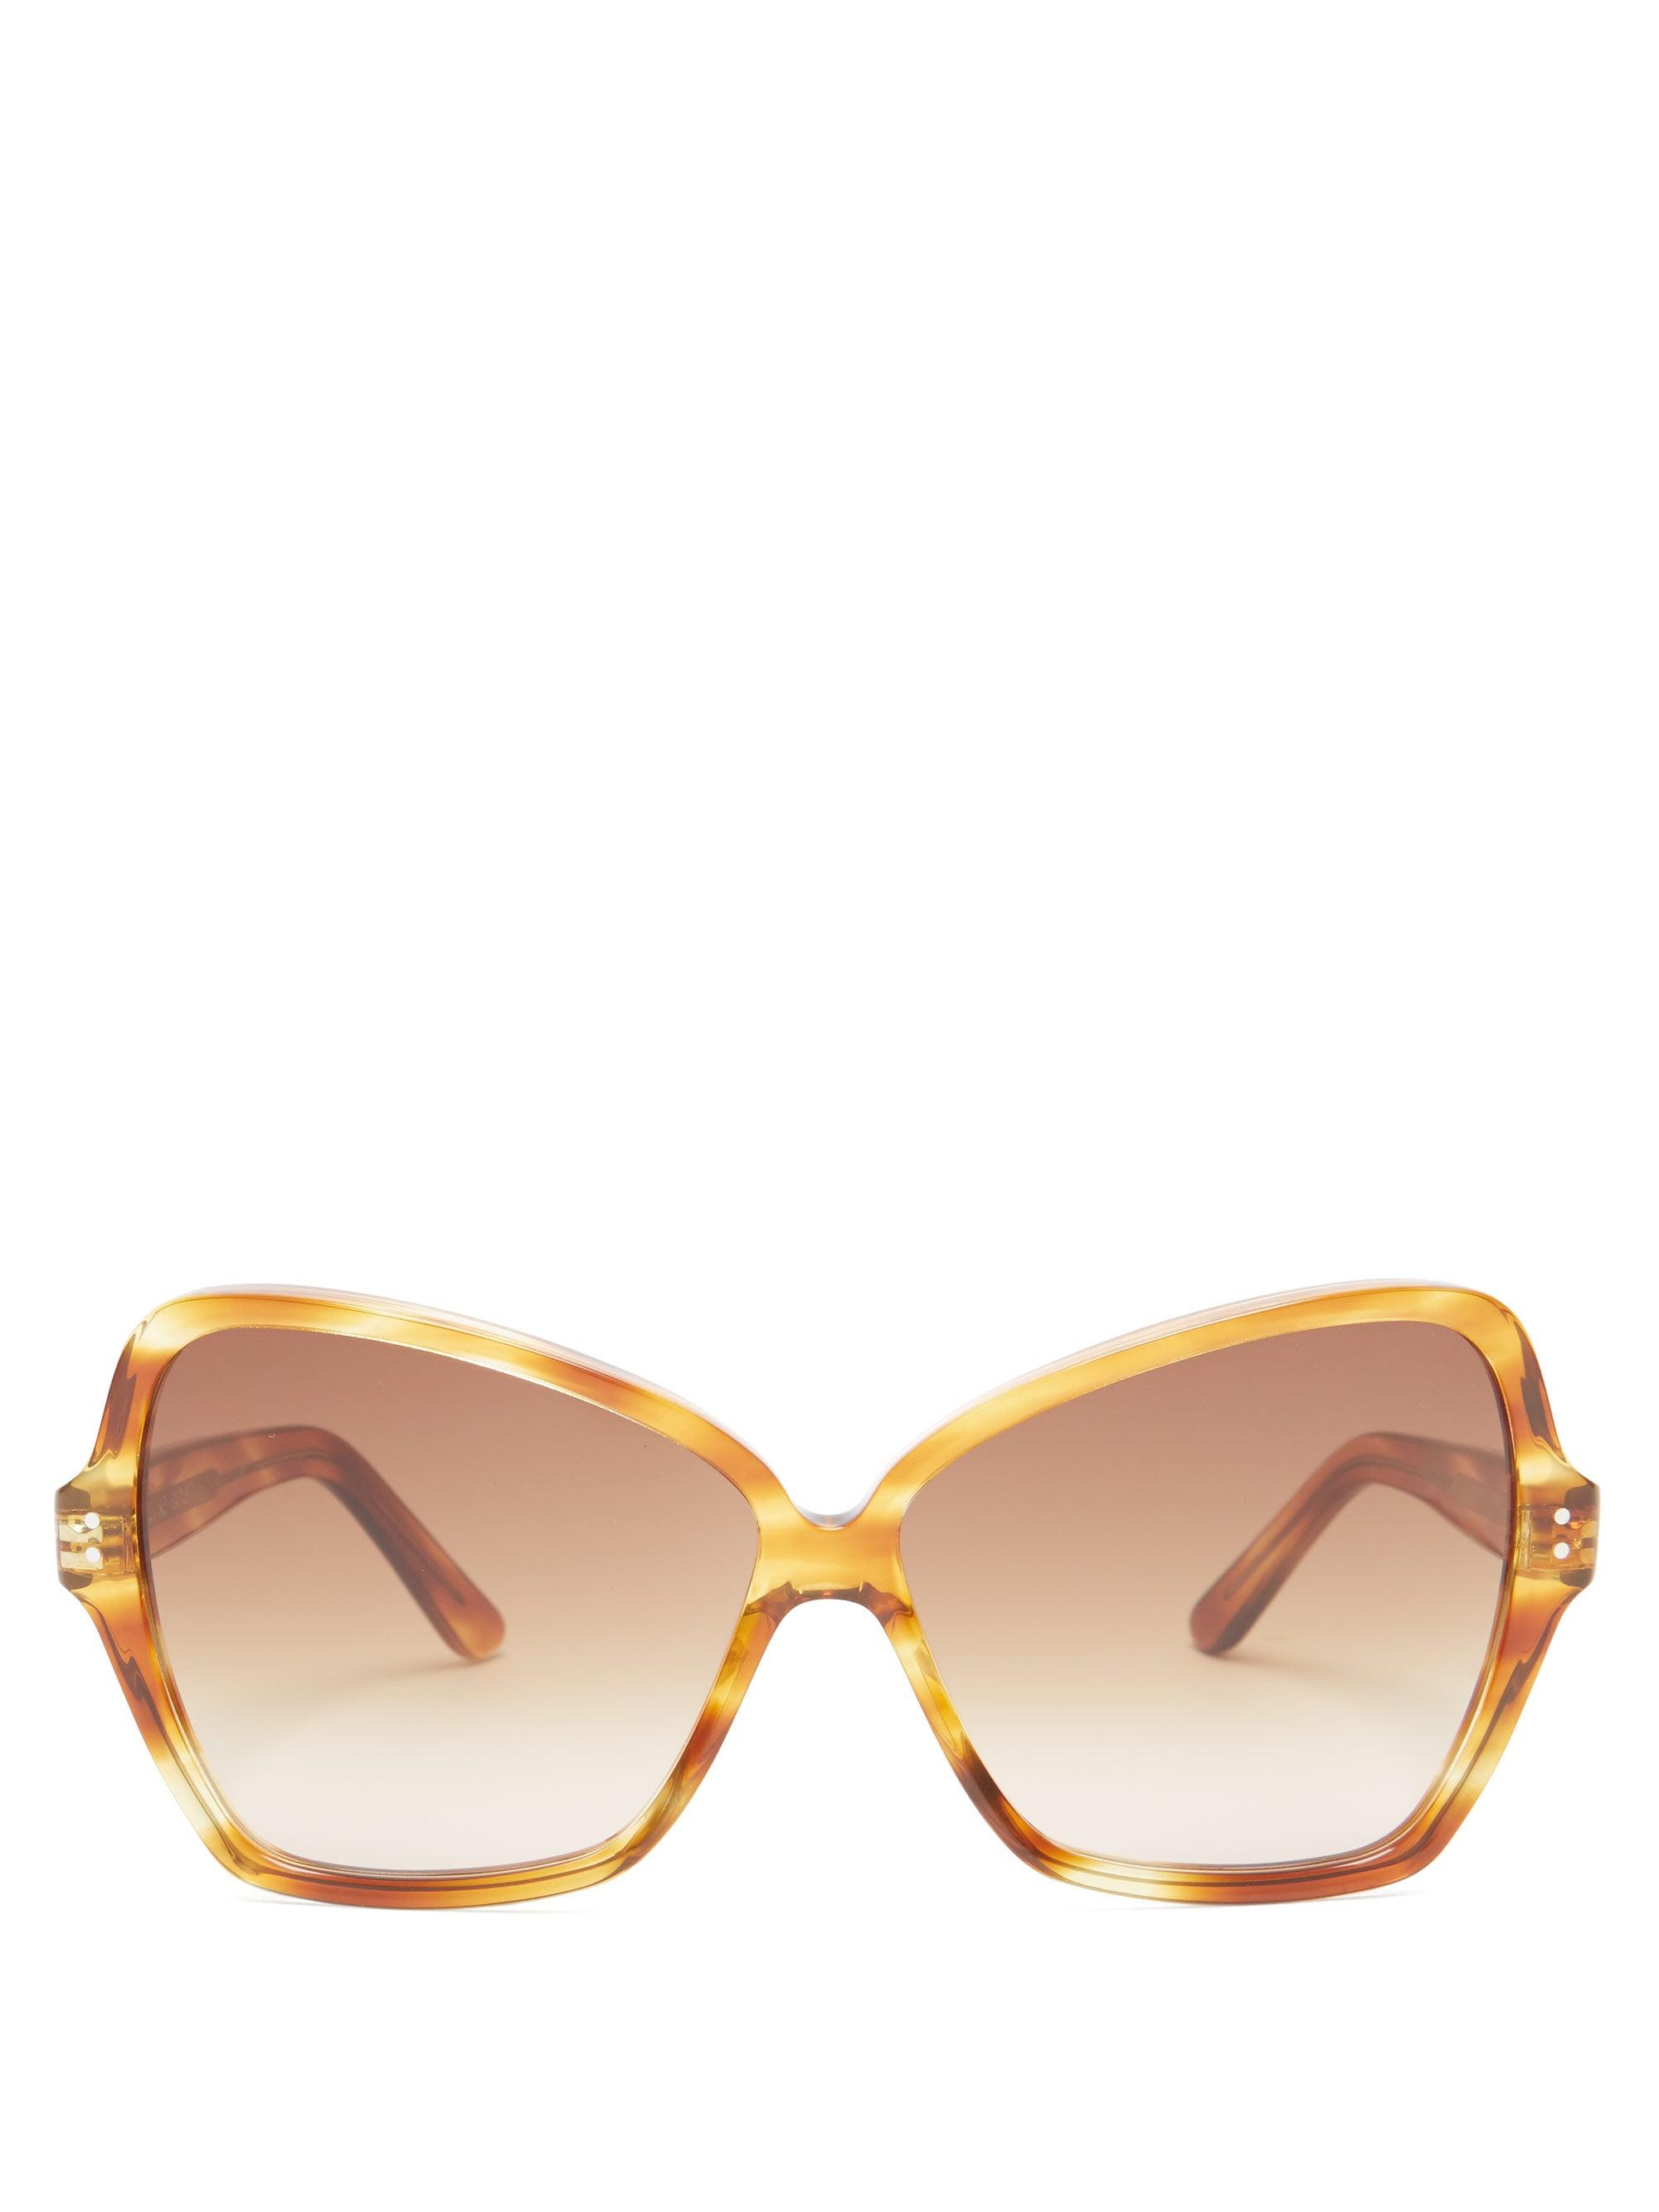 Celine Butterfly Acetate Sunglasses in Brown - Lyst